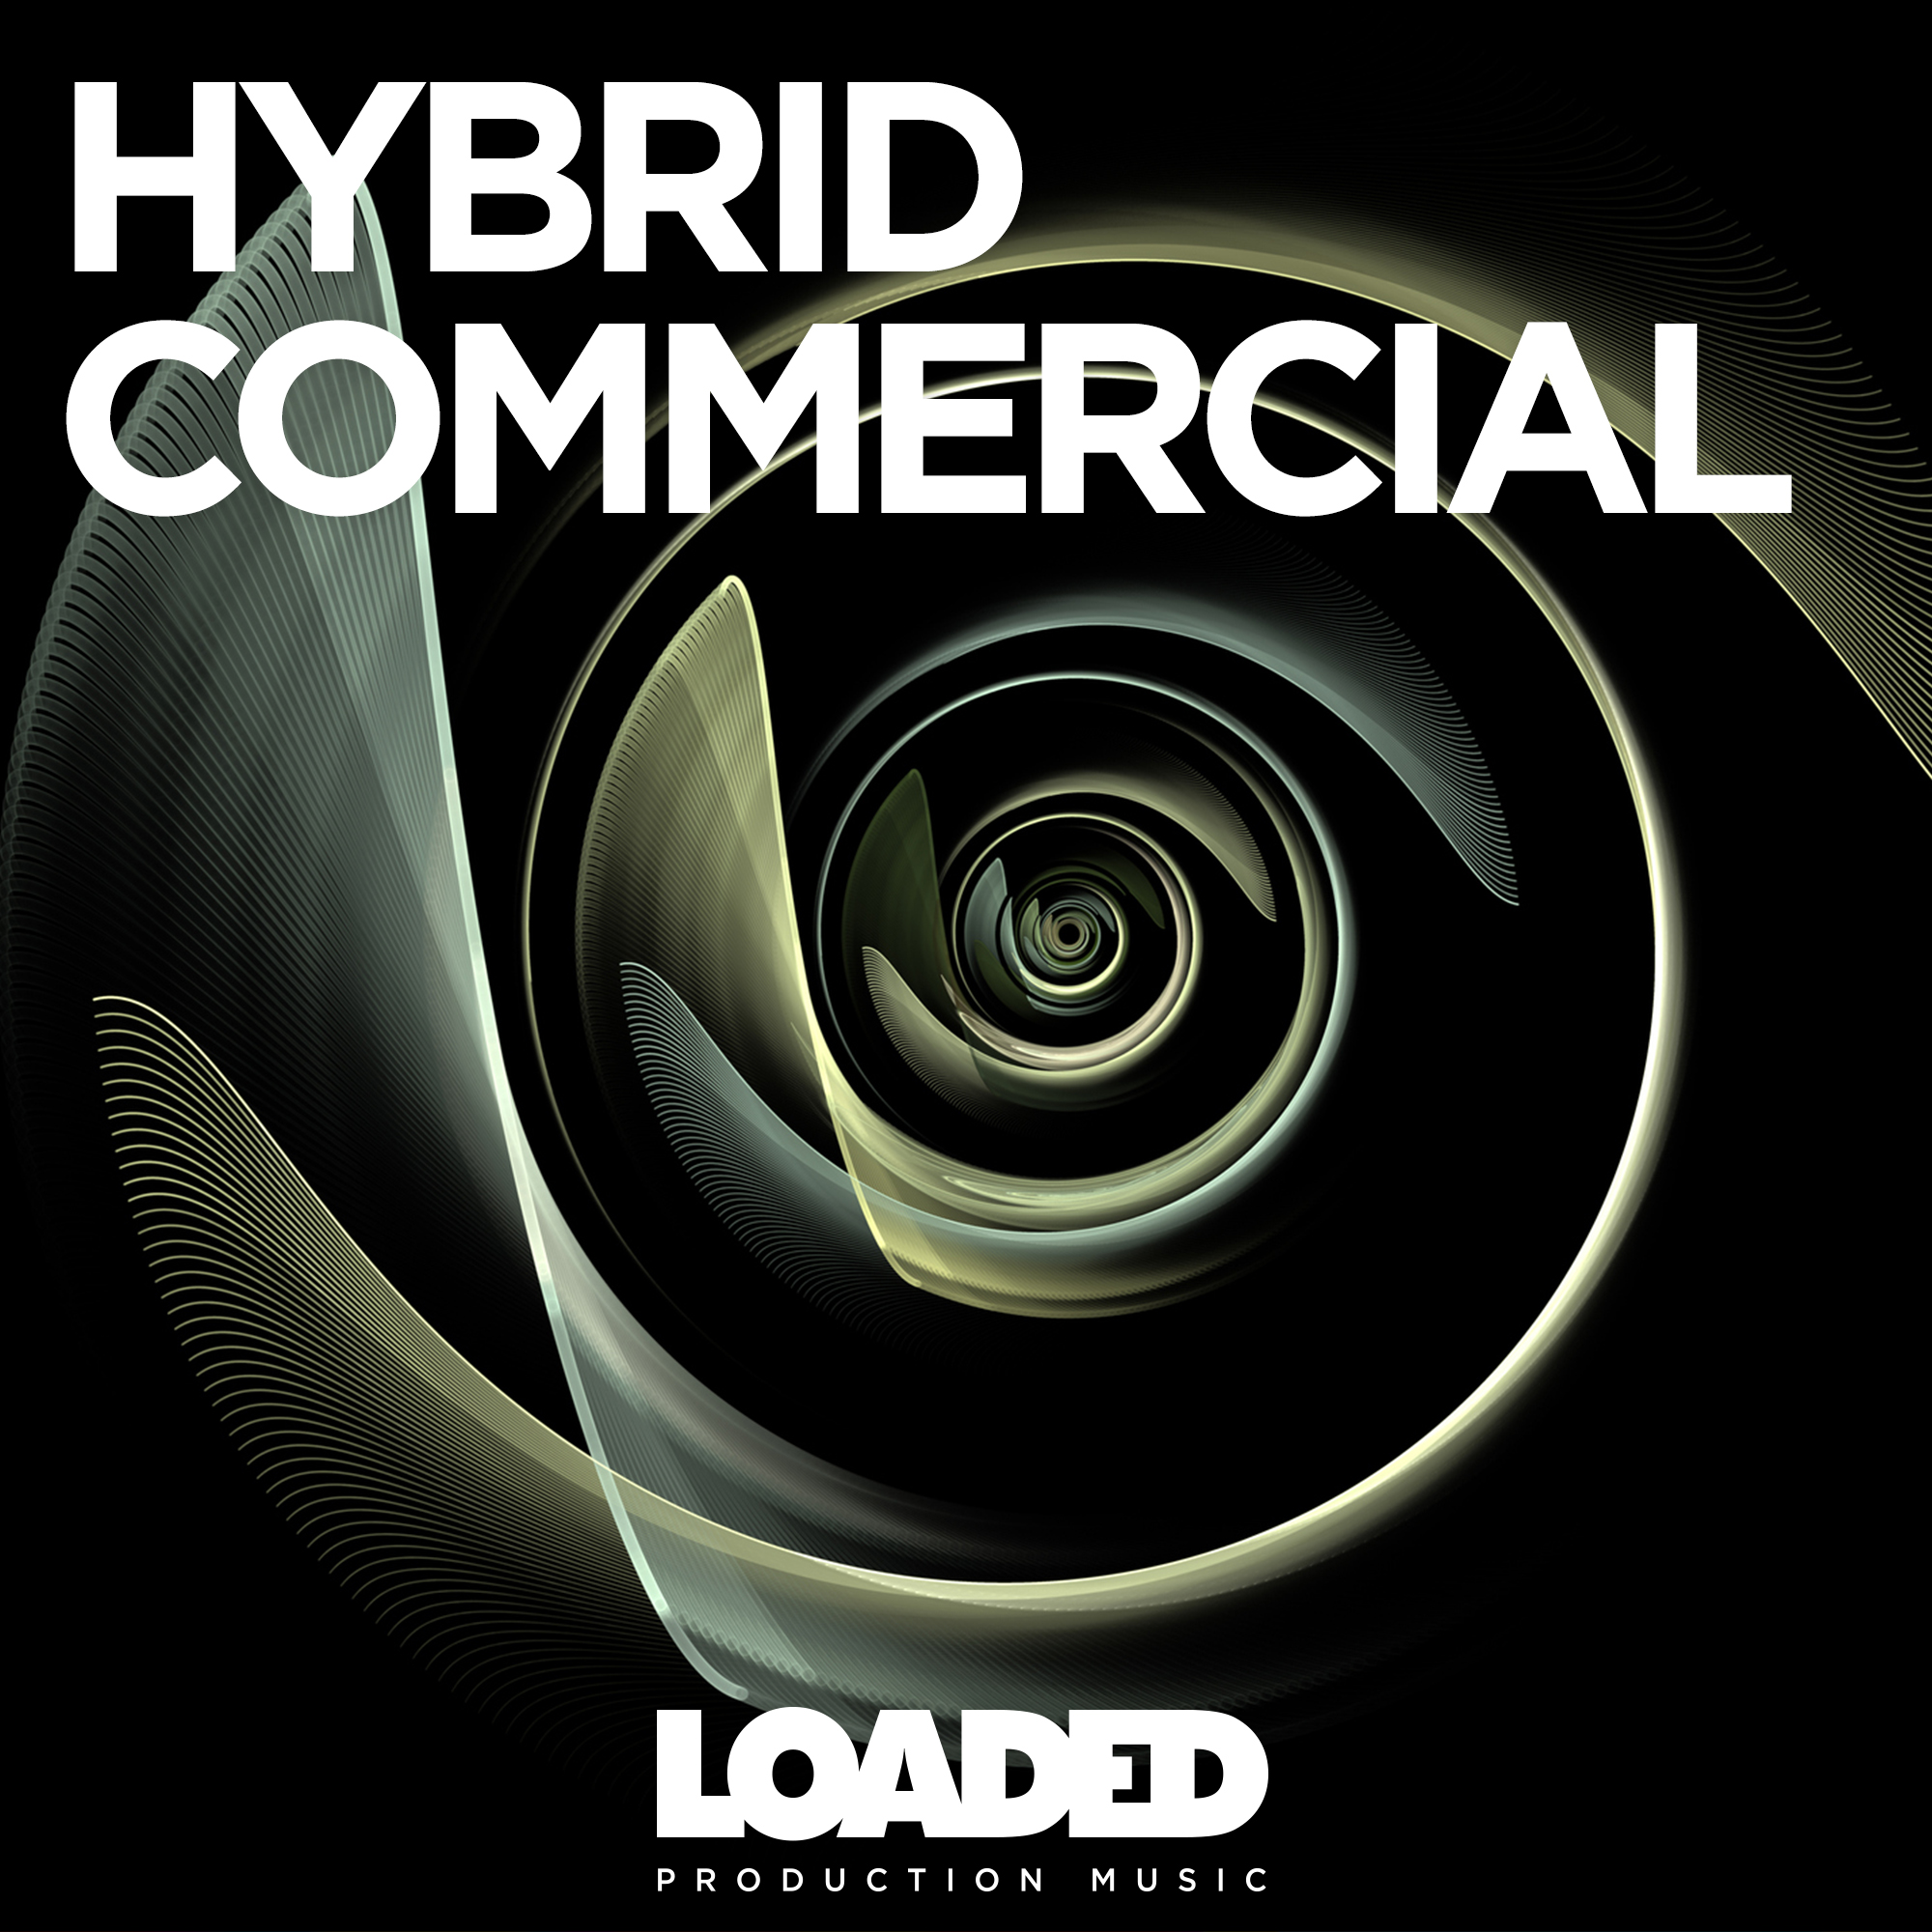 LPM 027 - HYBRID COMMERCIAL - ALBUM COVER